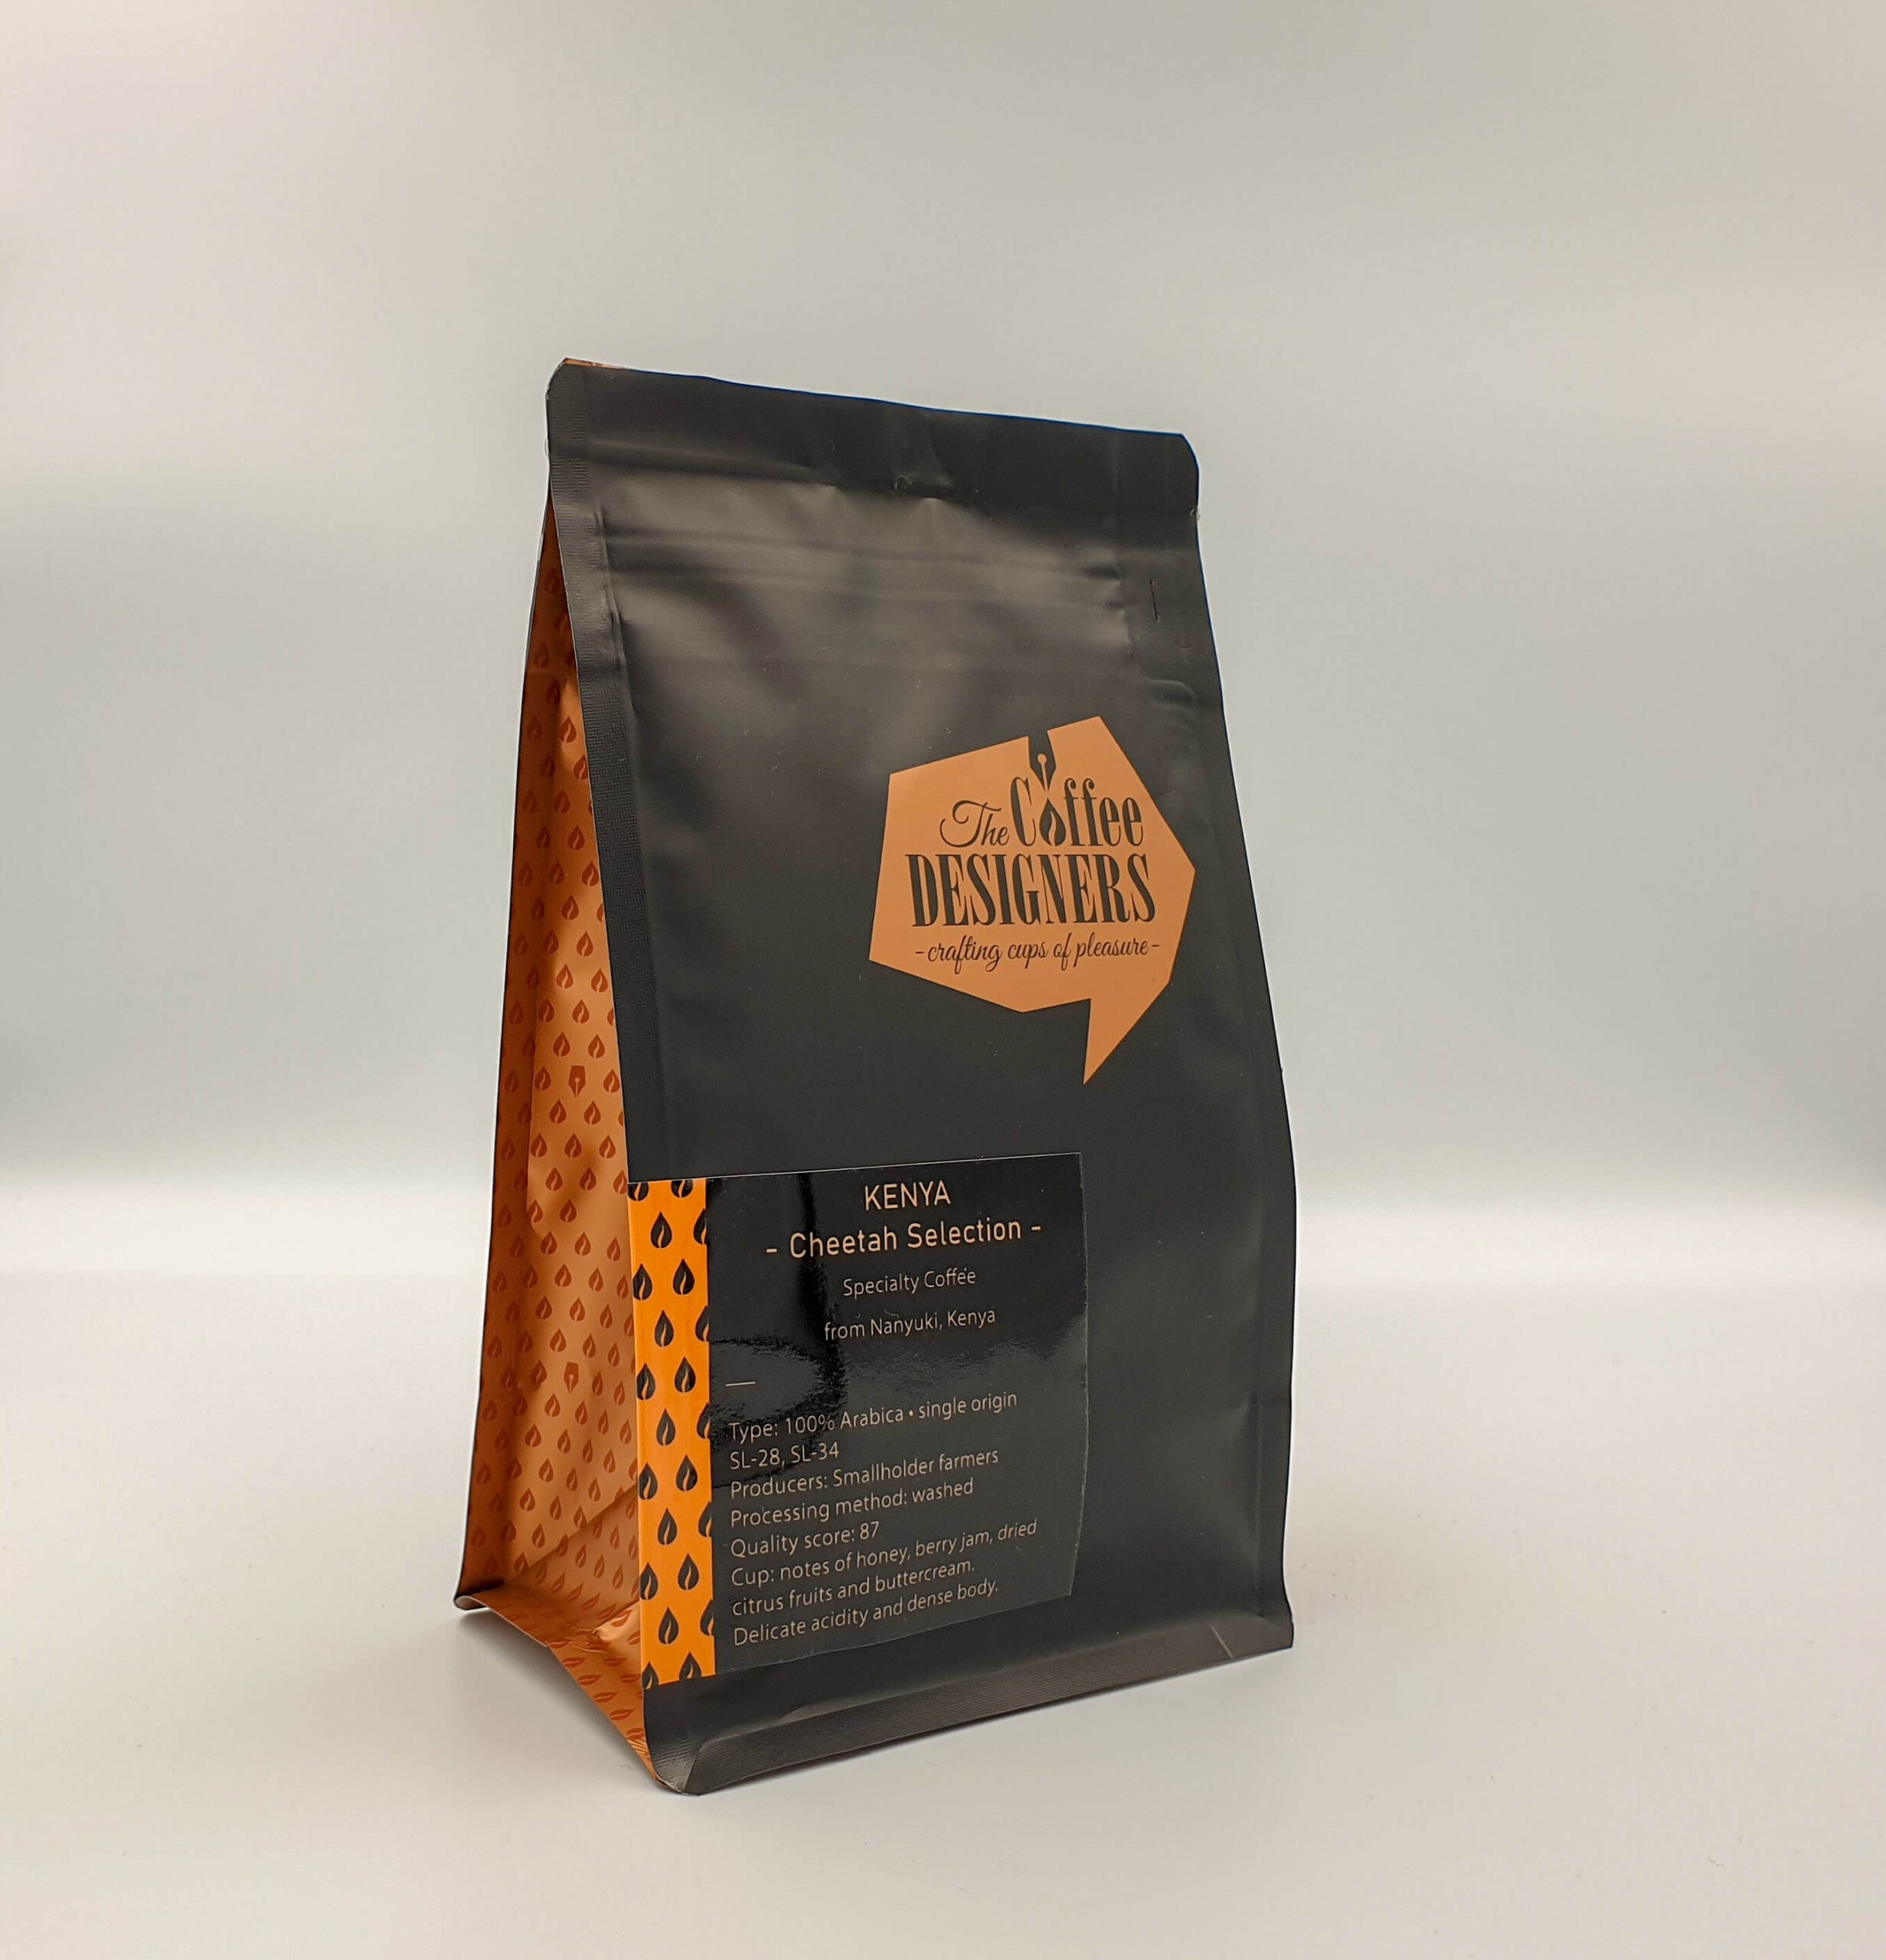 Cafea-de-specialitate_Kenya-Cheetah-Selection_Coffee-Designers